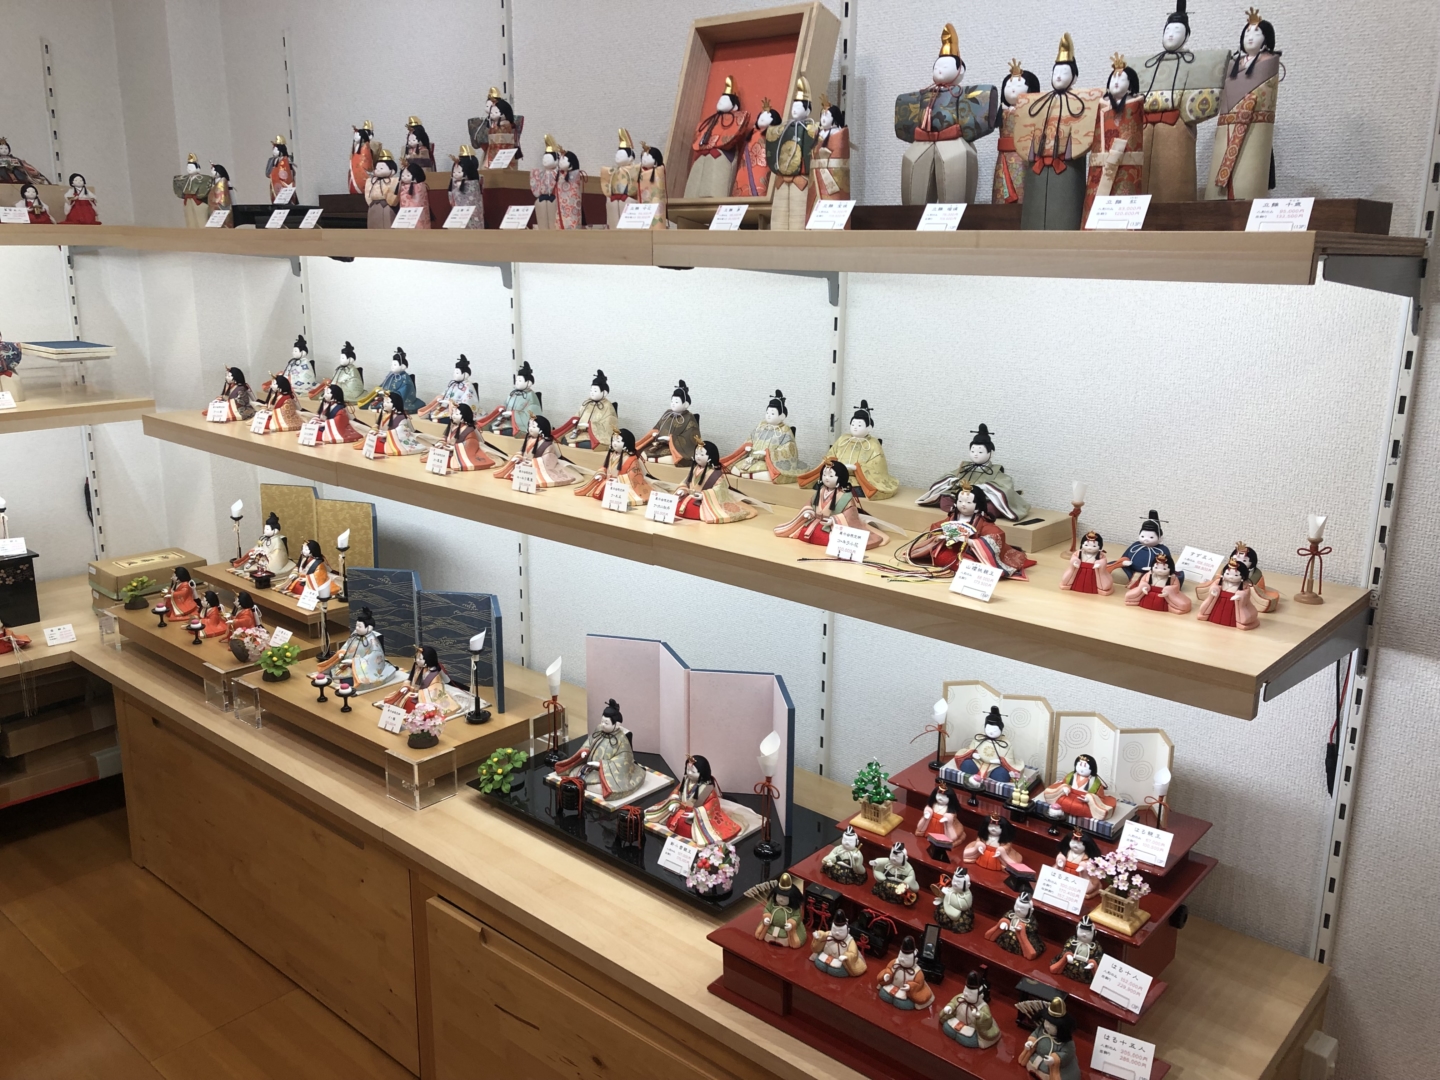 The traditional craft of Sekku dolls as interior art